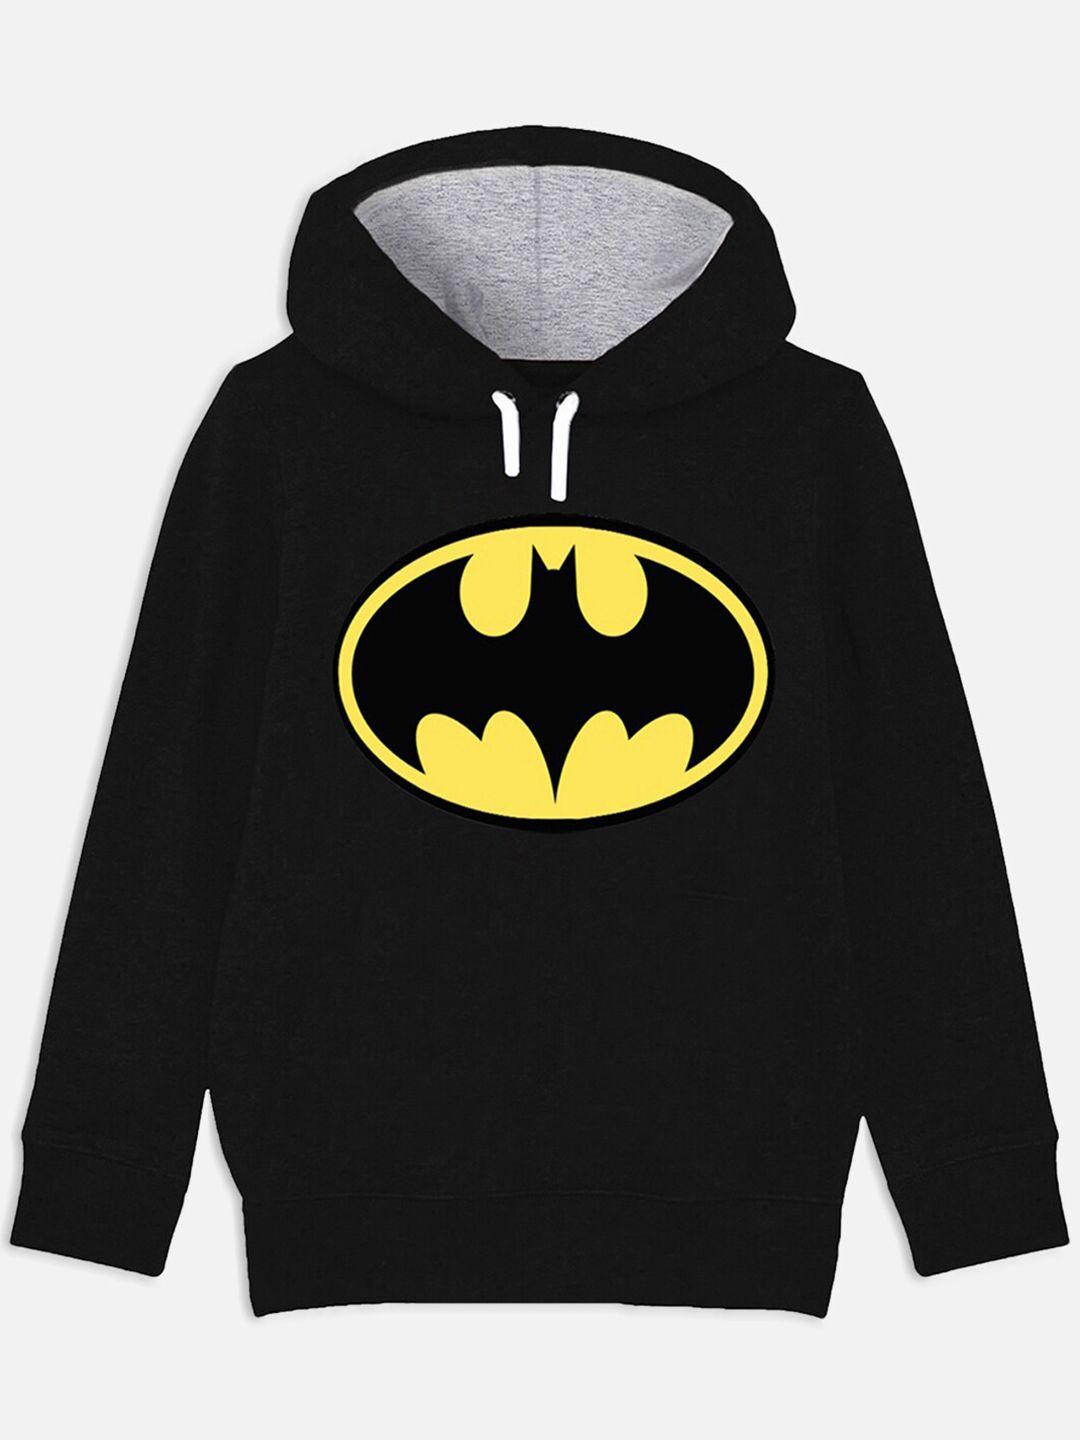 yk justice league boys black & yellow batman printed hooded sweatshirt